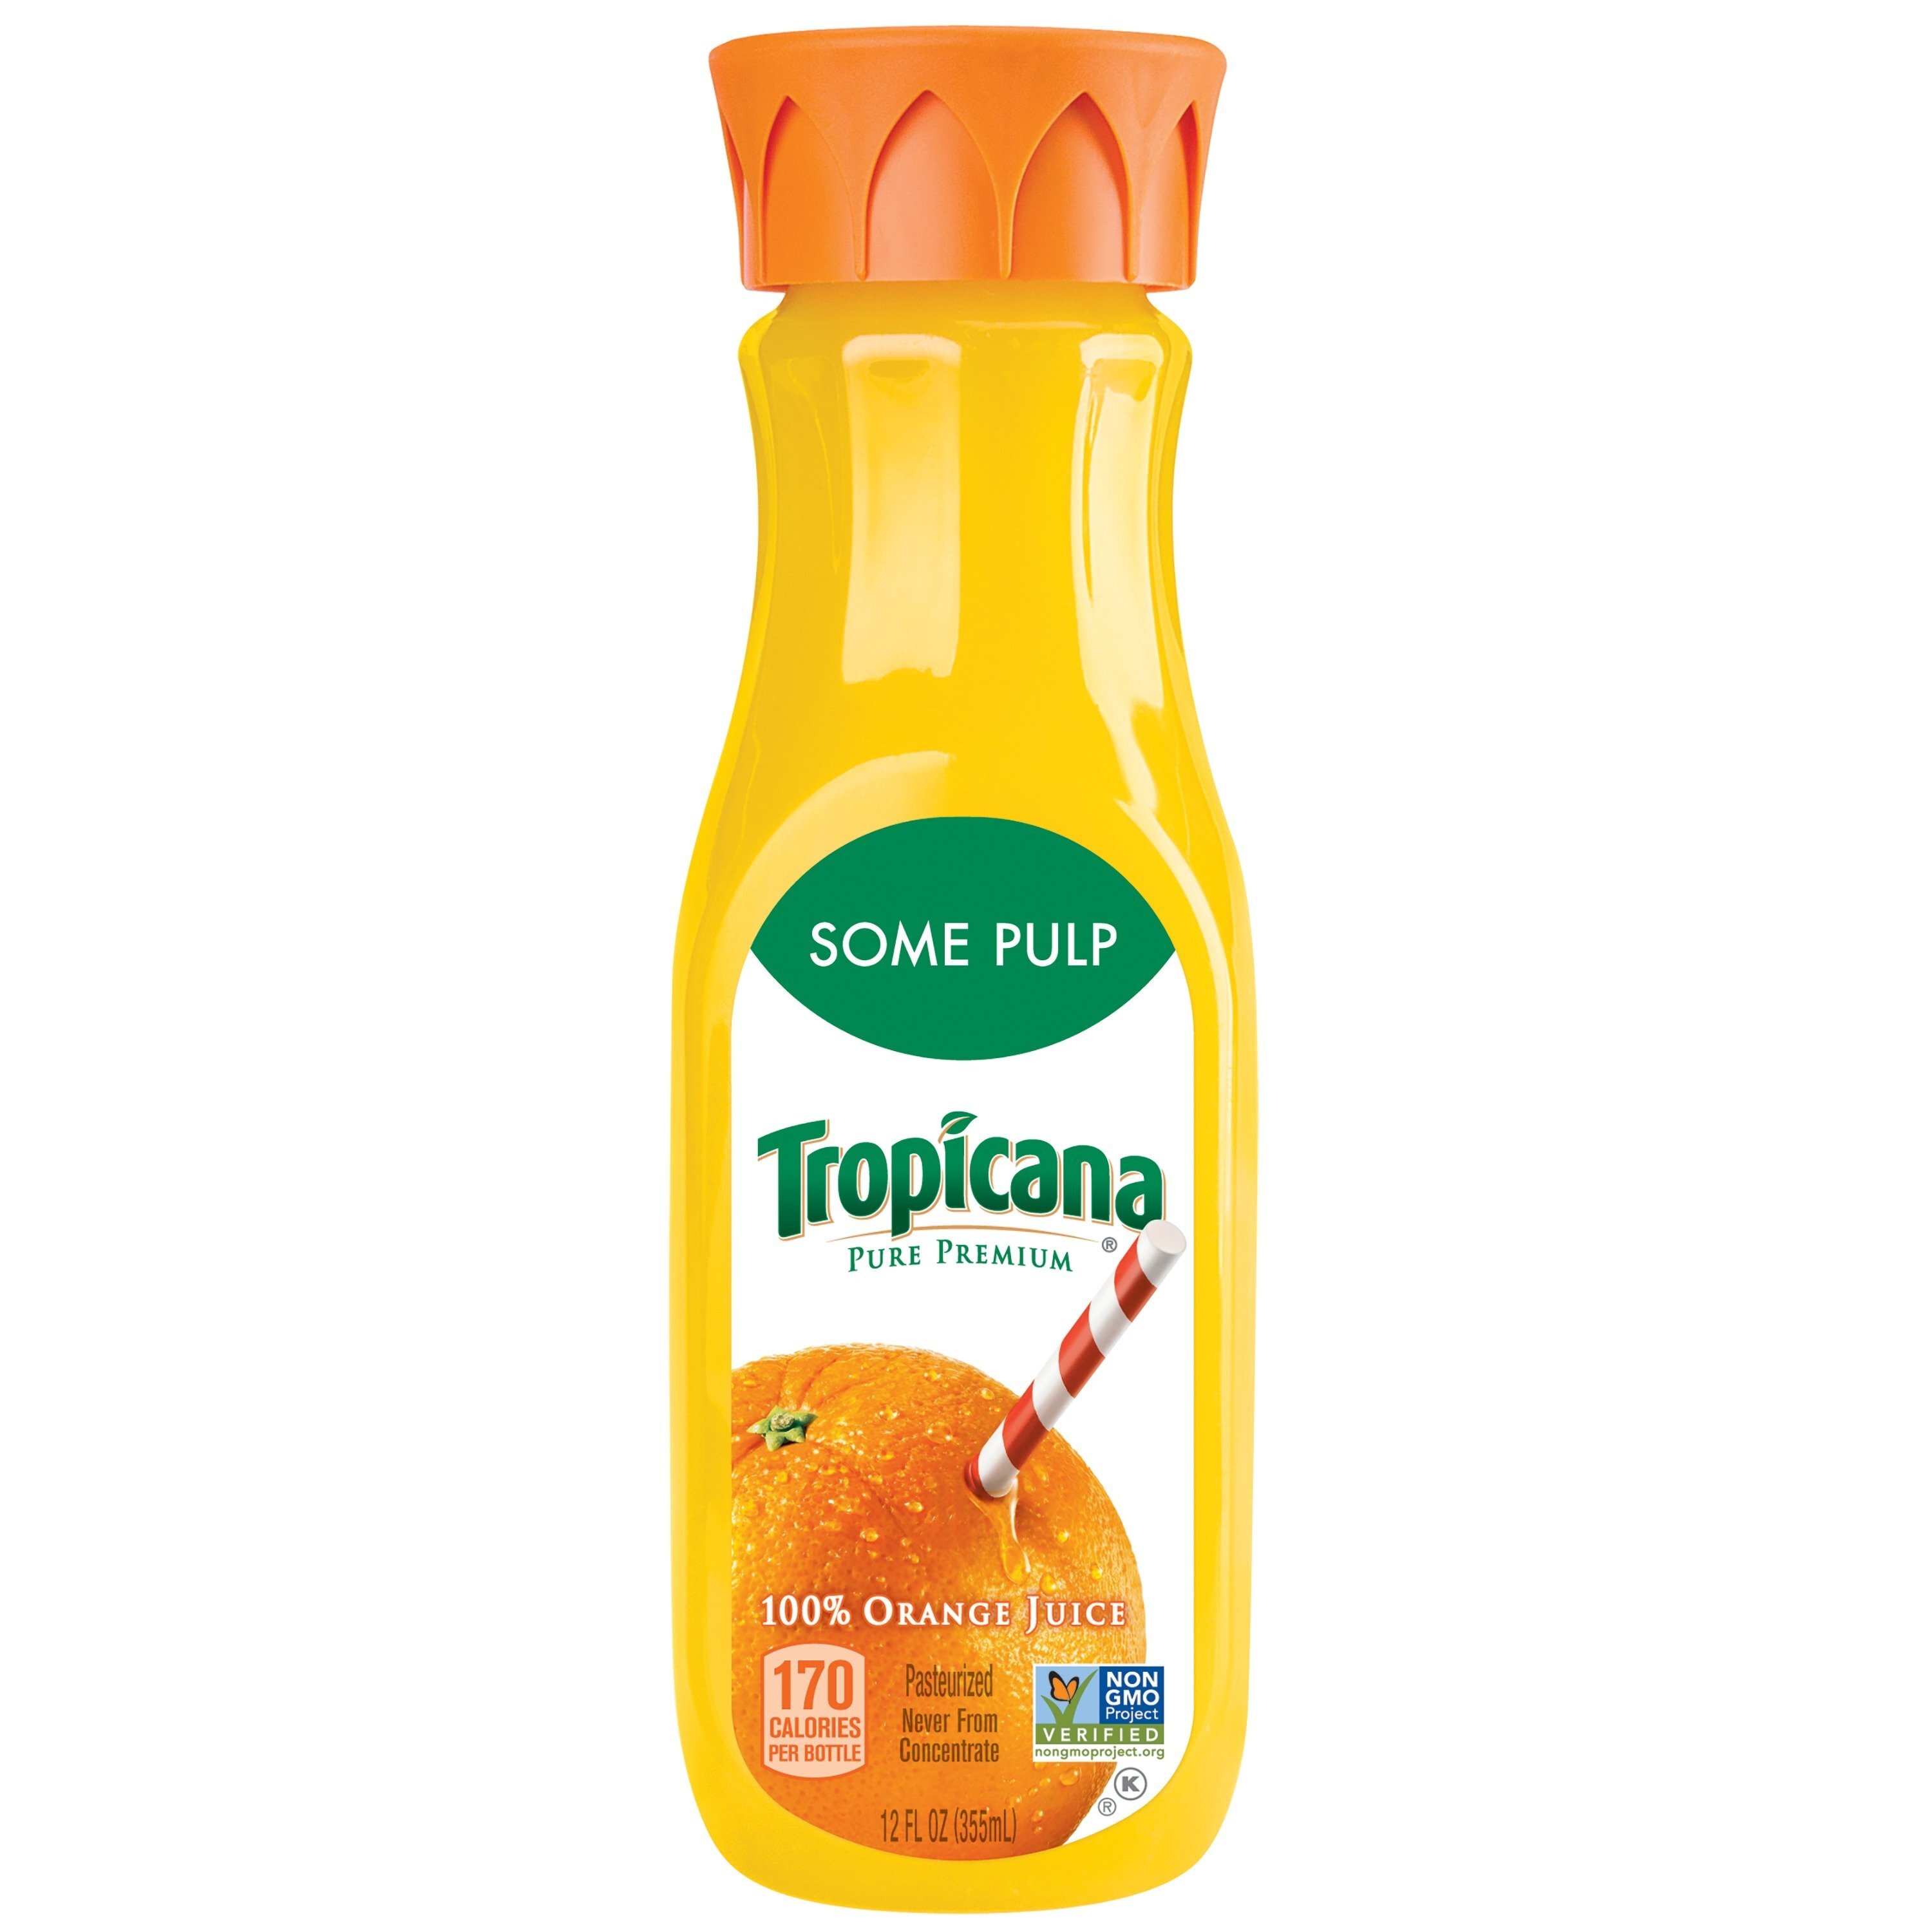 Tropicana Pure Premium, Some Pulp 100% Orange Juice, 12 oz Bottle - image 1 of 3